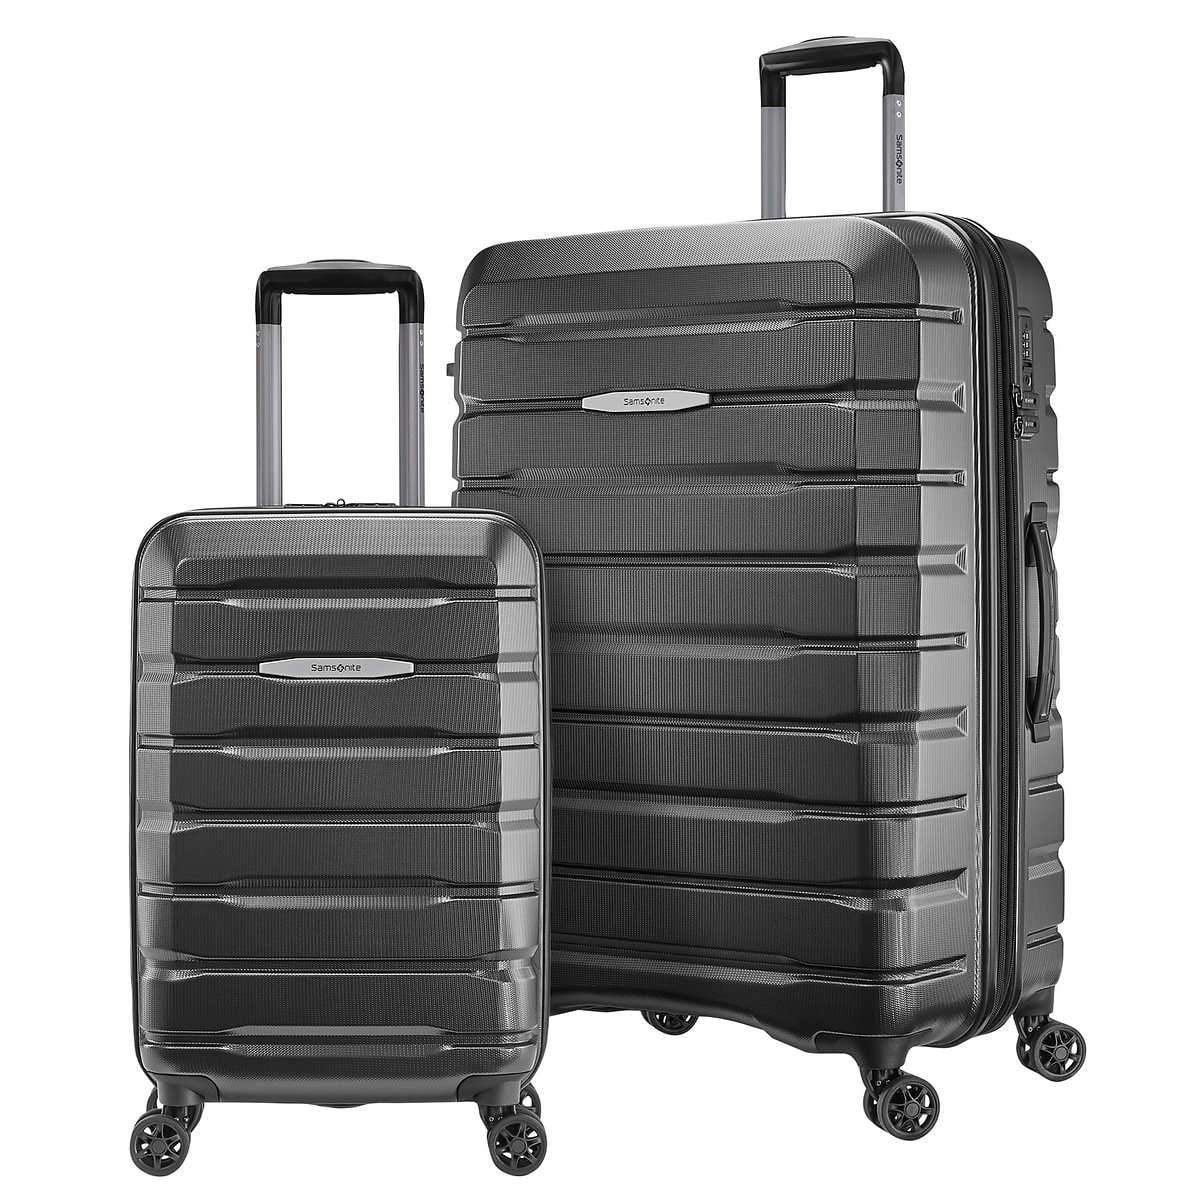 Samsonite briefcase with wheels | Bags | Gumtree Australia Queensland -  Gold Coast Region | 1313114243